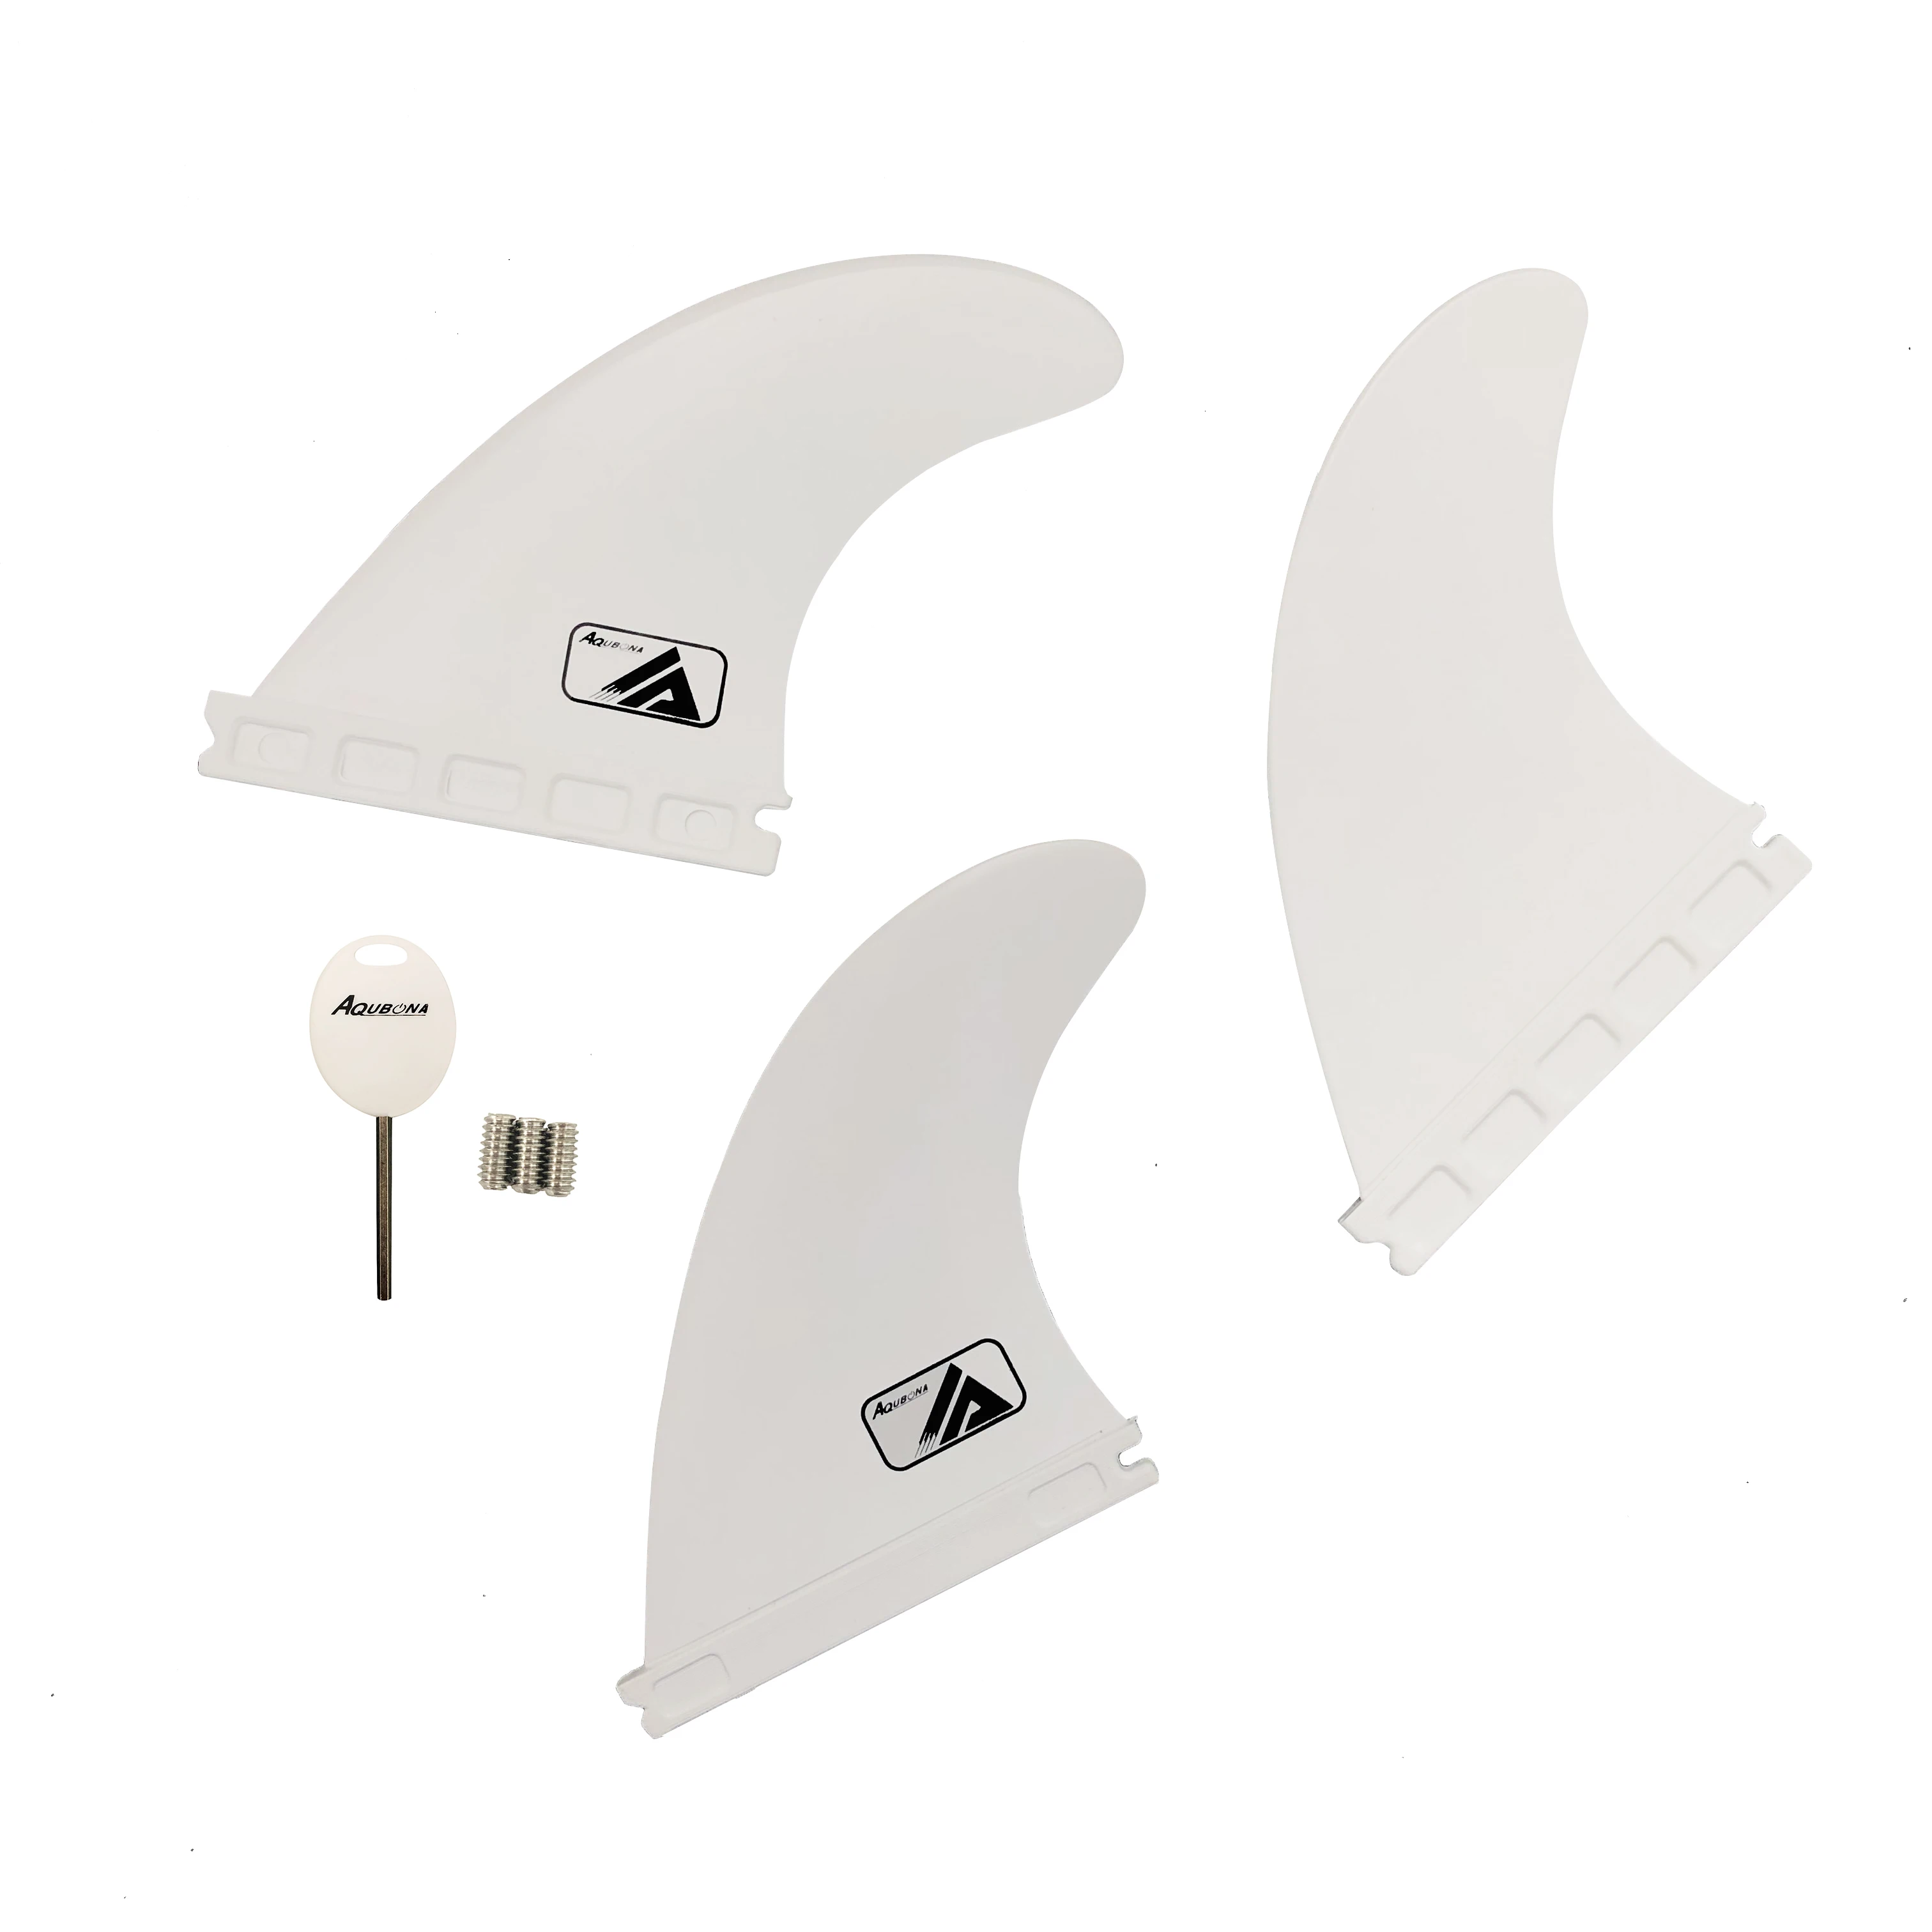 Белый пластик G5 доска для серфинга Fututre Thruster плавники(доска для серфинга) плавники для серфинга